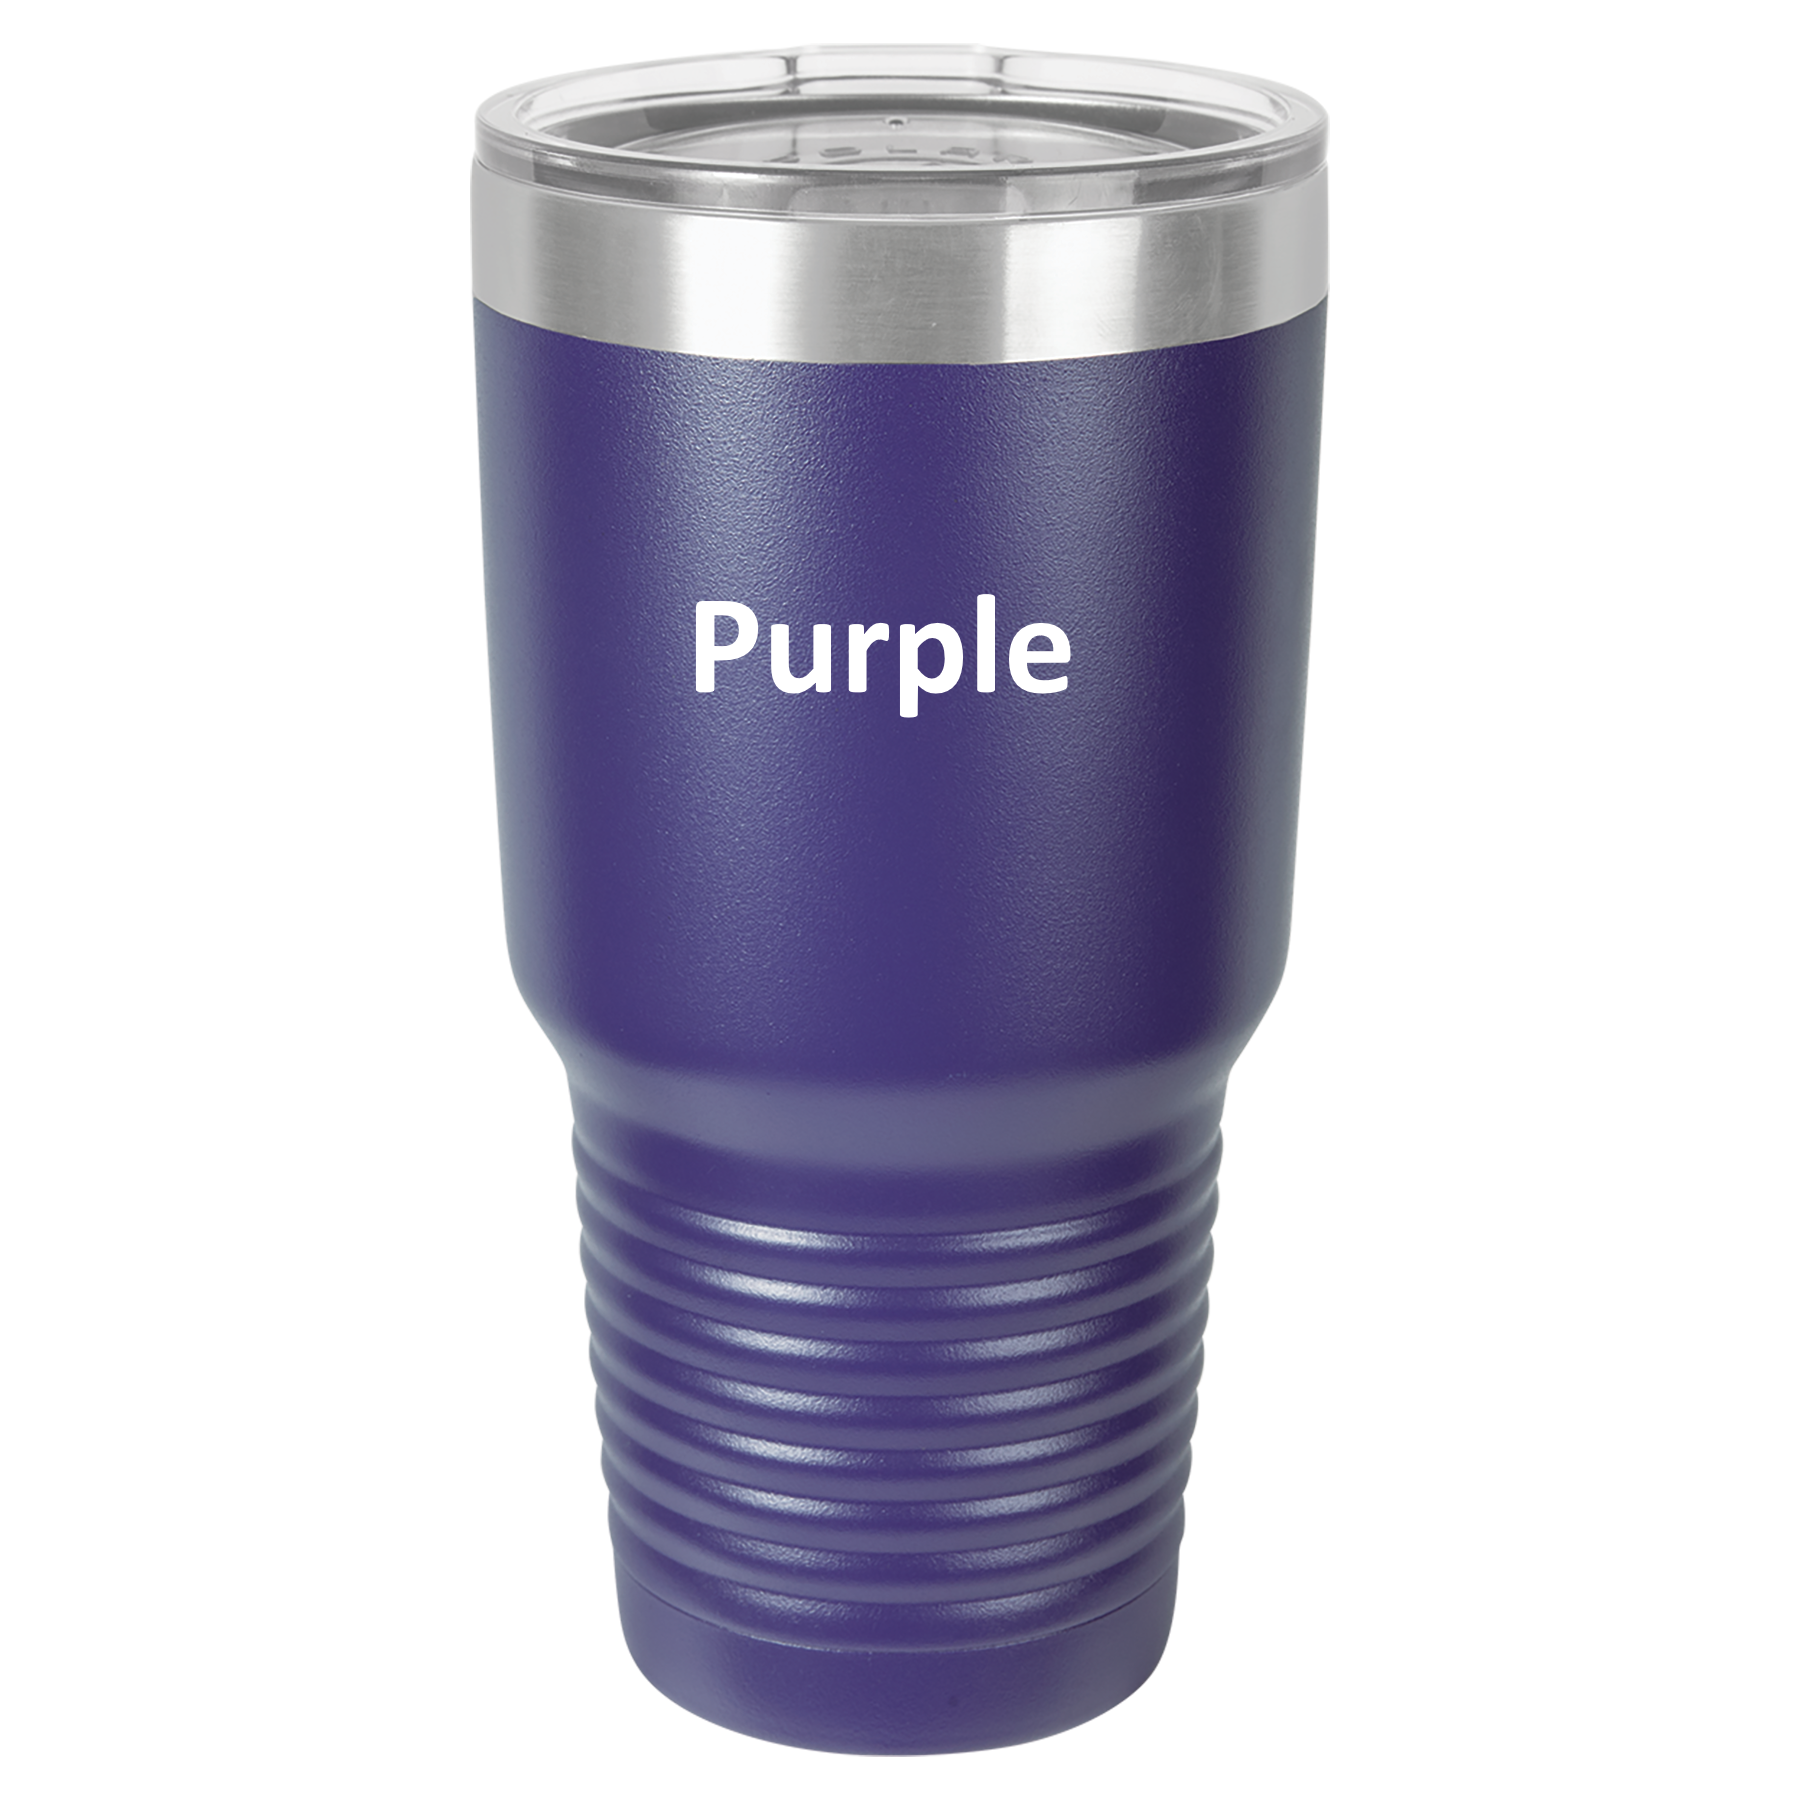 Purple 30oz Tumbler